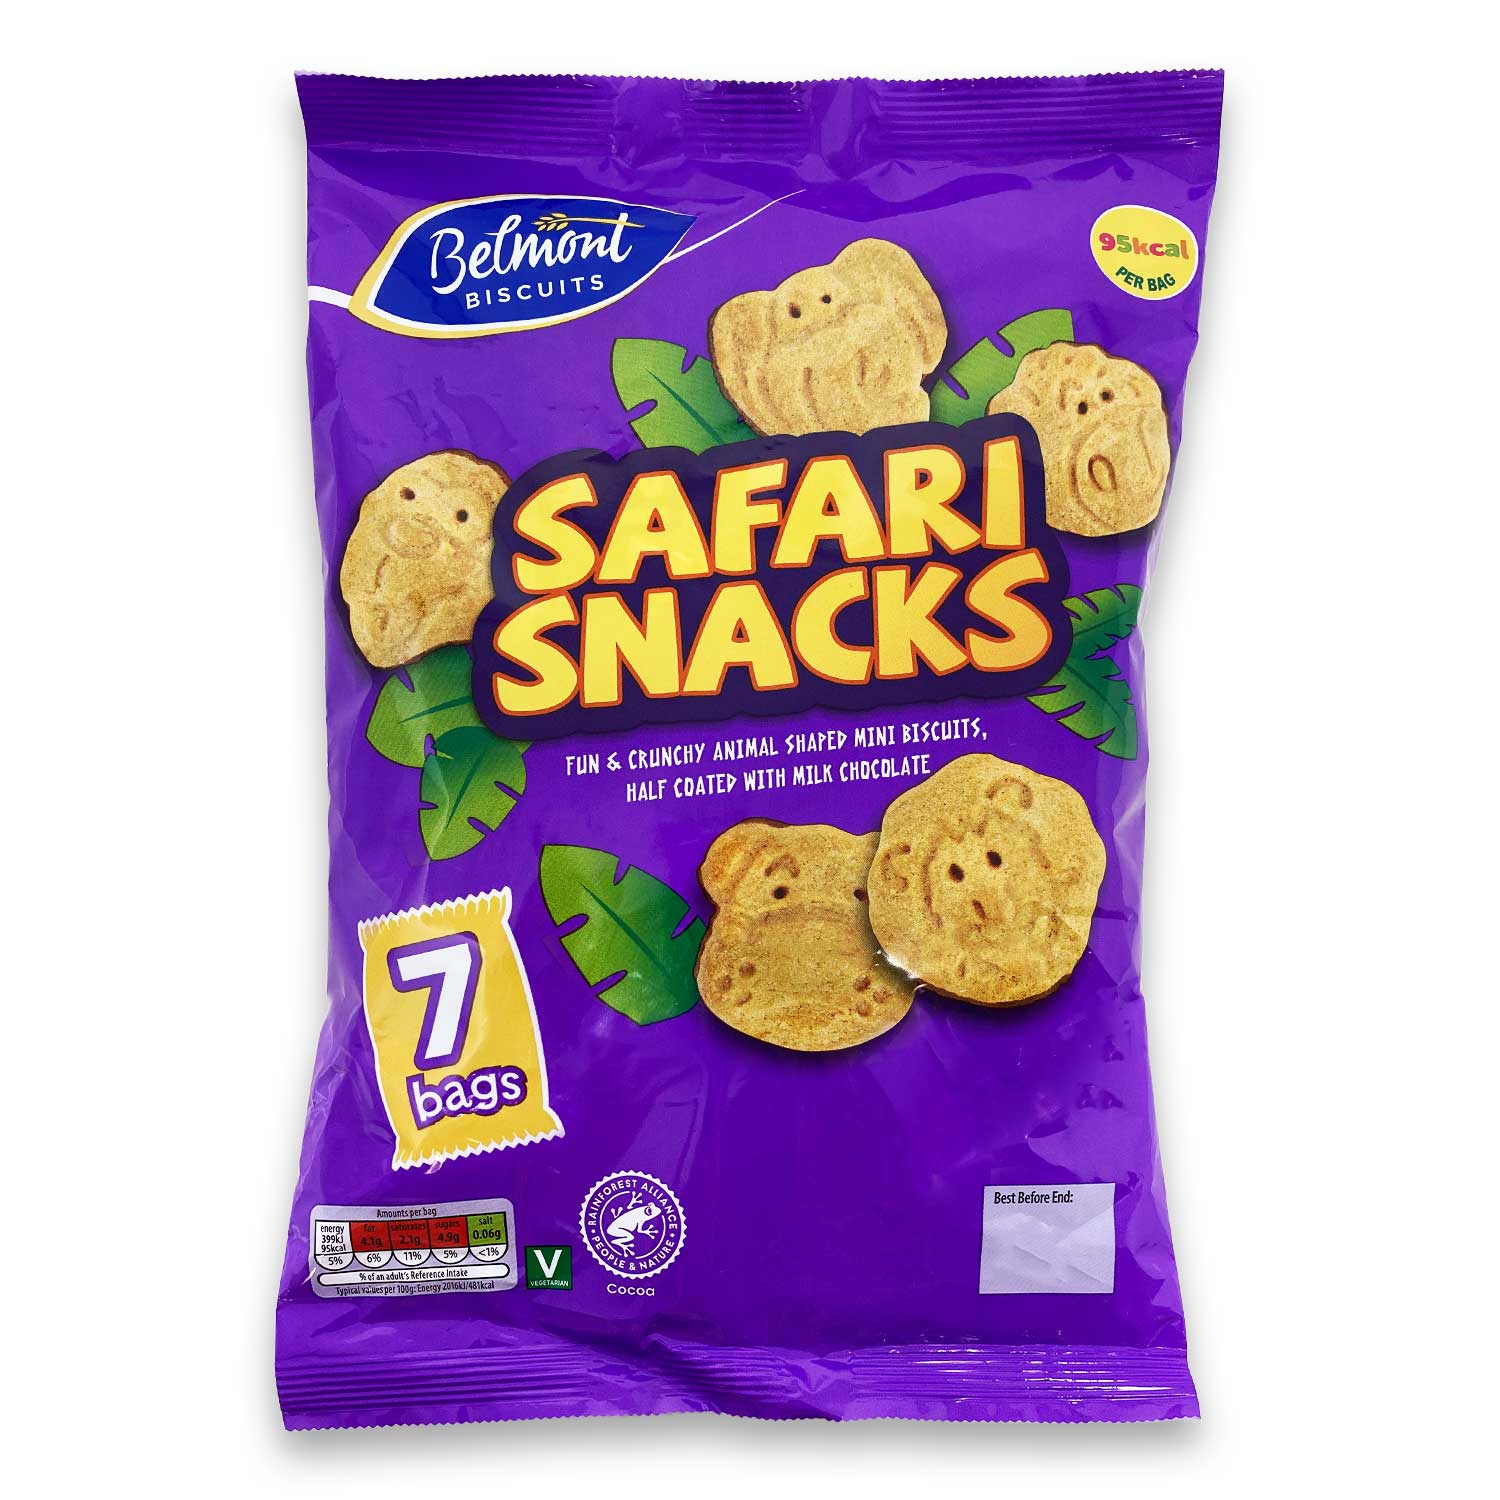 belmont safari snacks